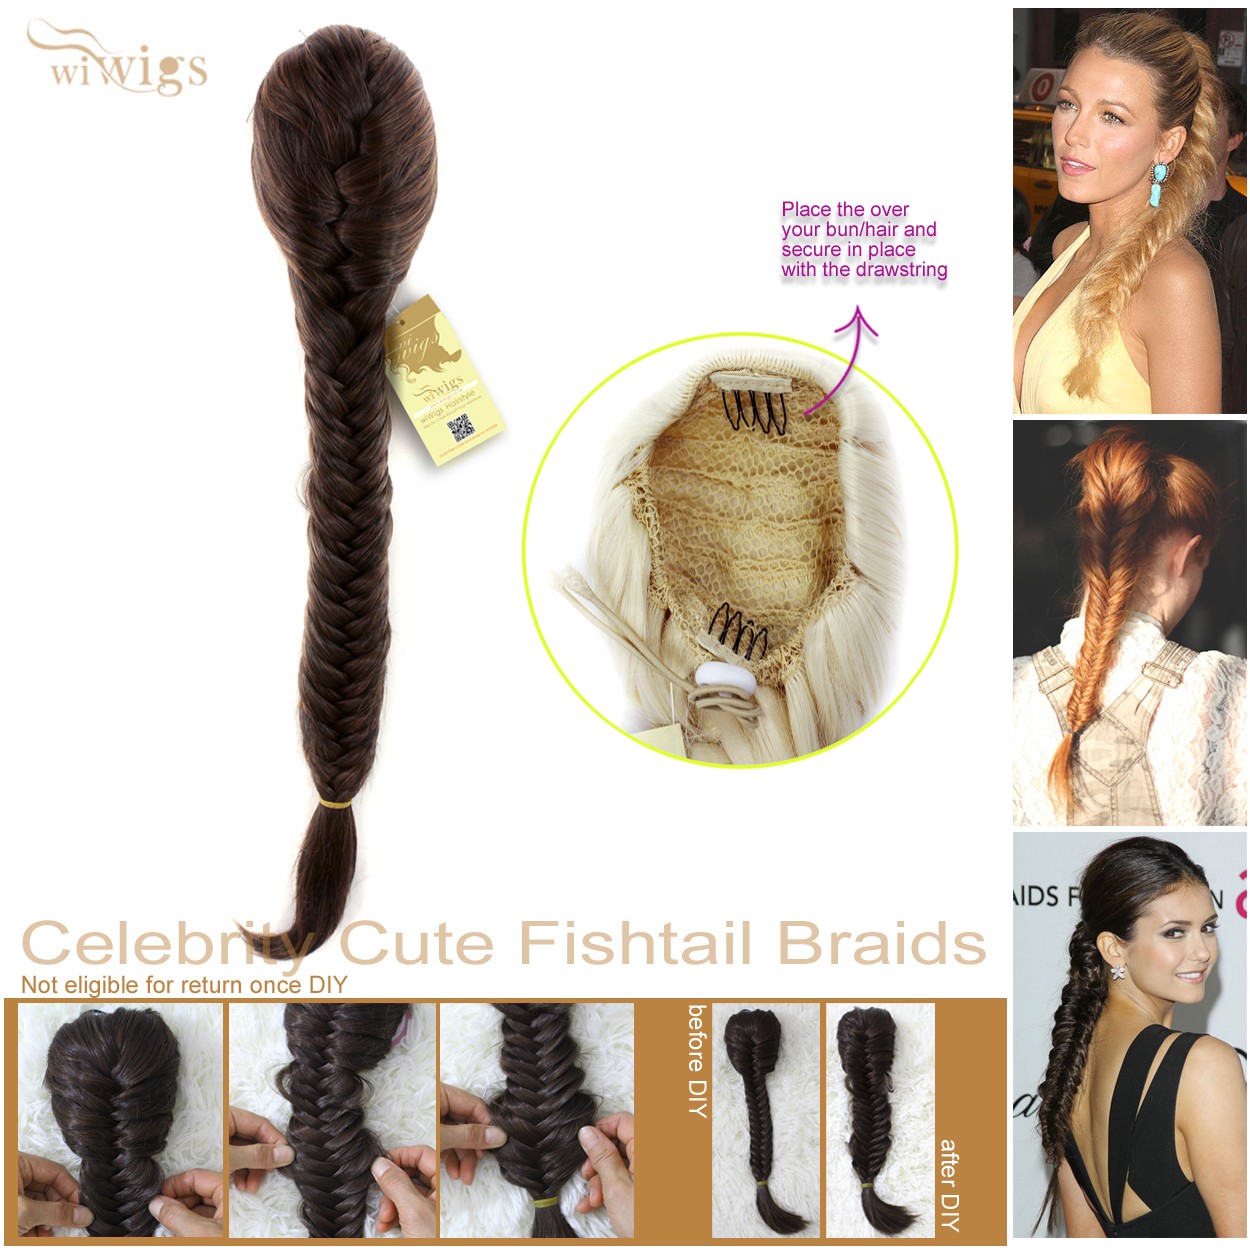 Wiwigs - Celebrity Cute Medium Brown Auburn Mix Fishtail Braids clip in  Ponytail Plaited Hair Extensions DIY